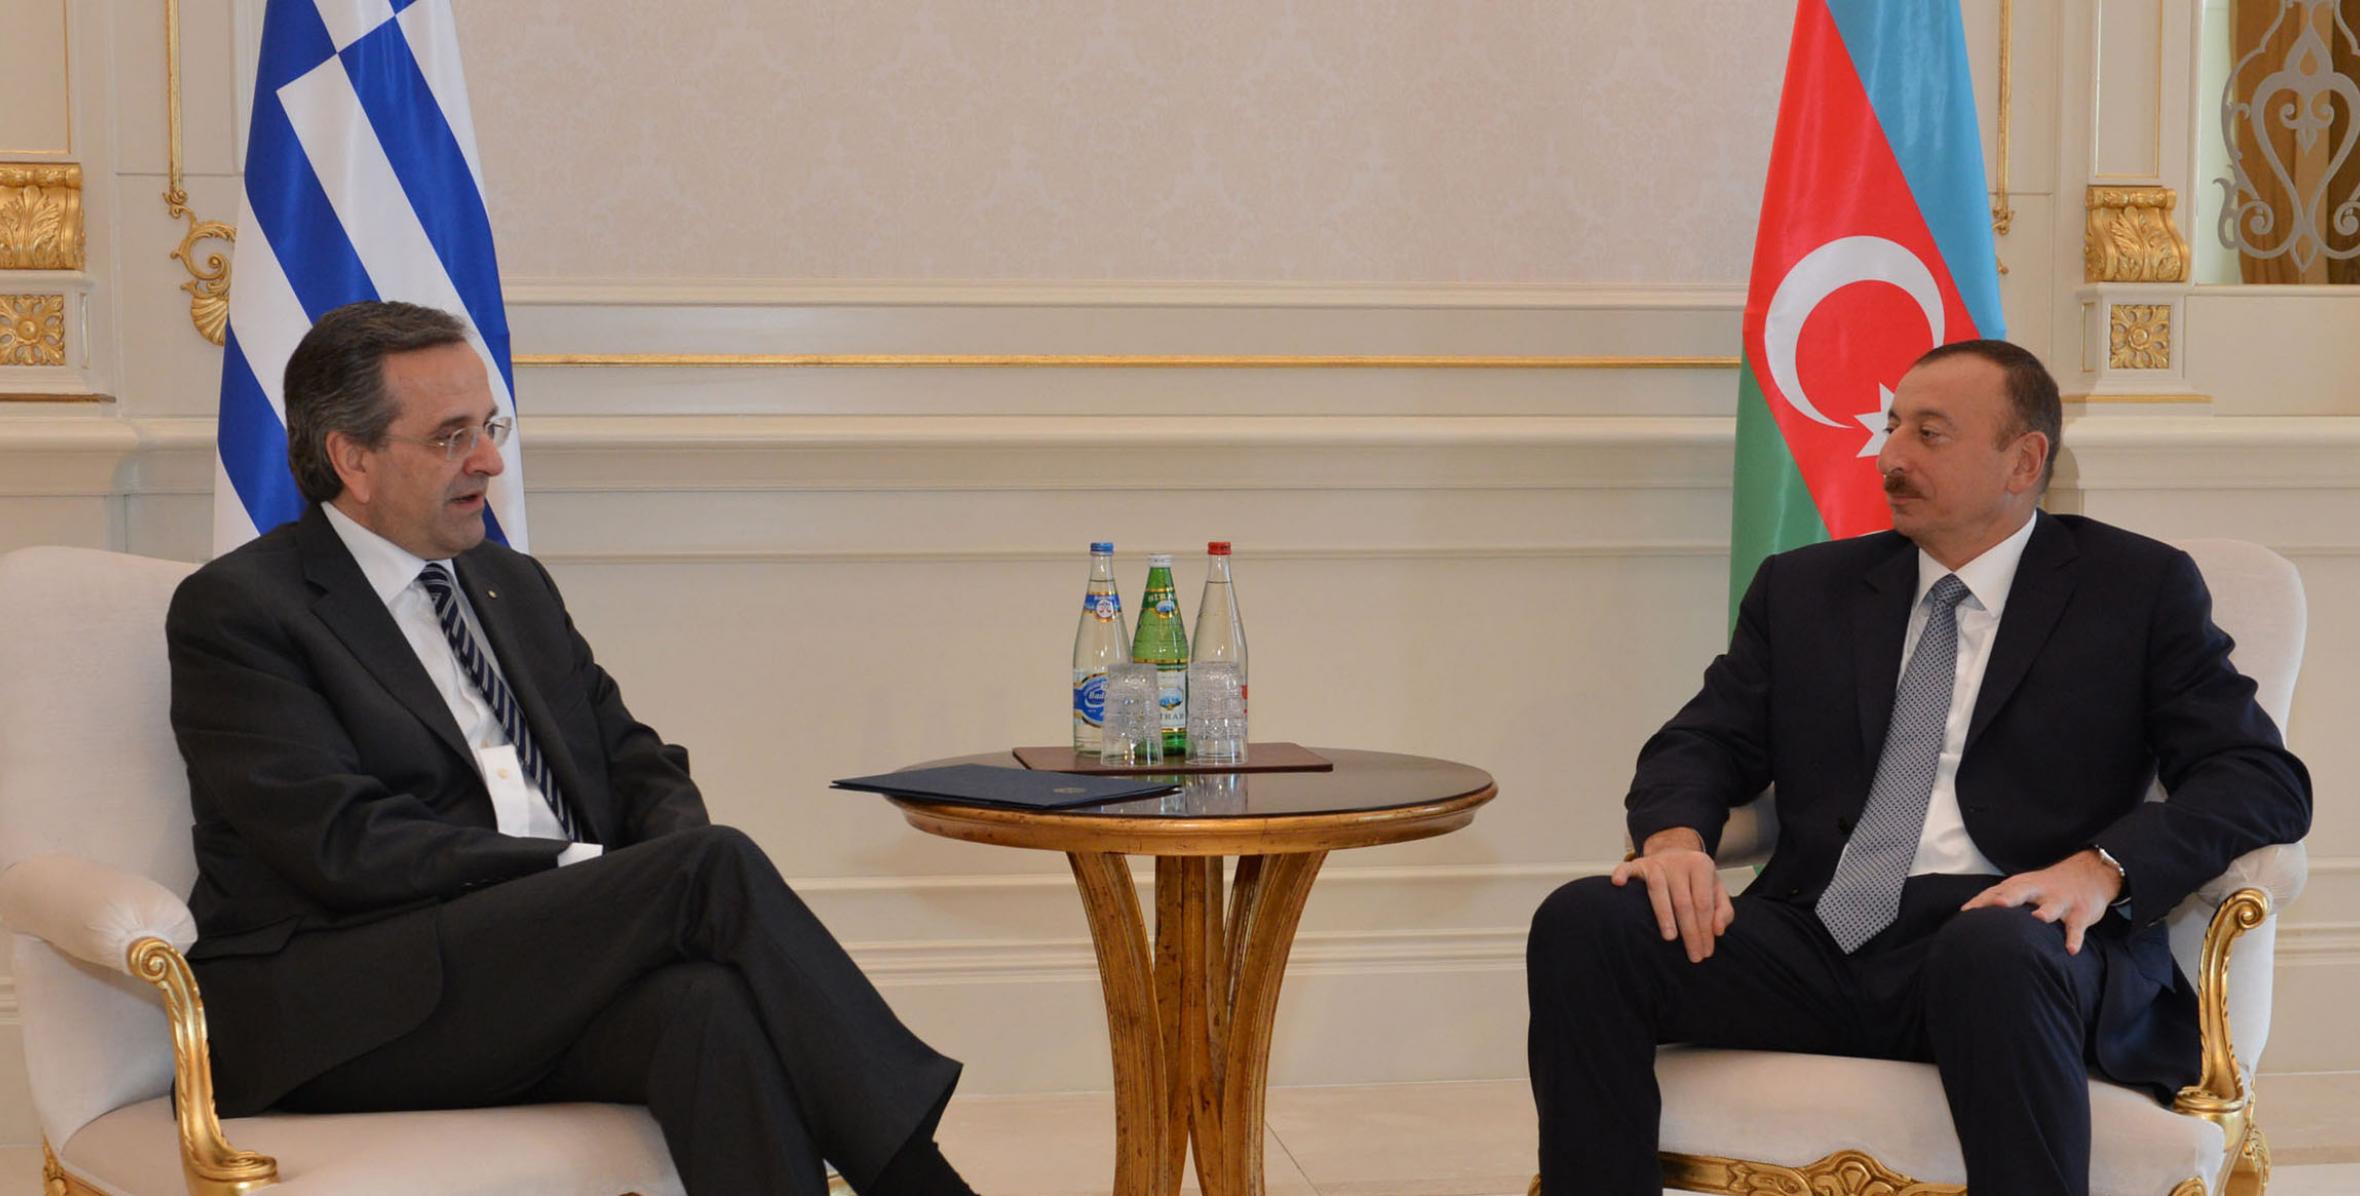 Ilham Aliyev met with Prime Minister of Greece Antonis Samaras